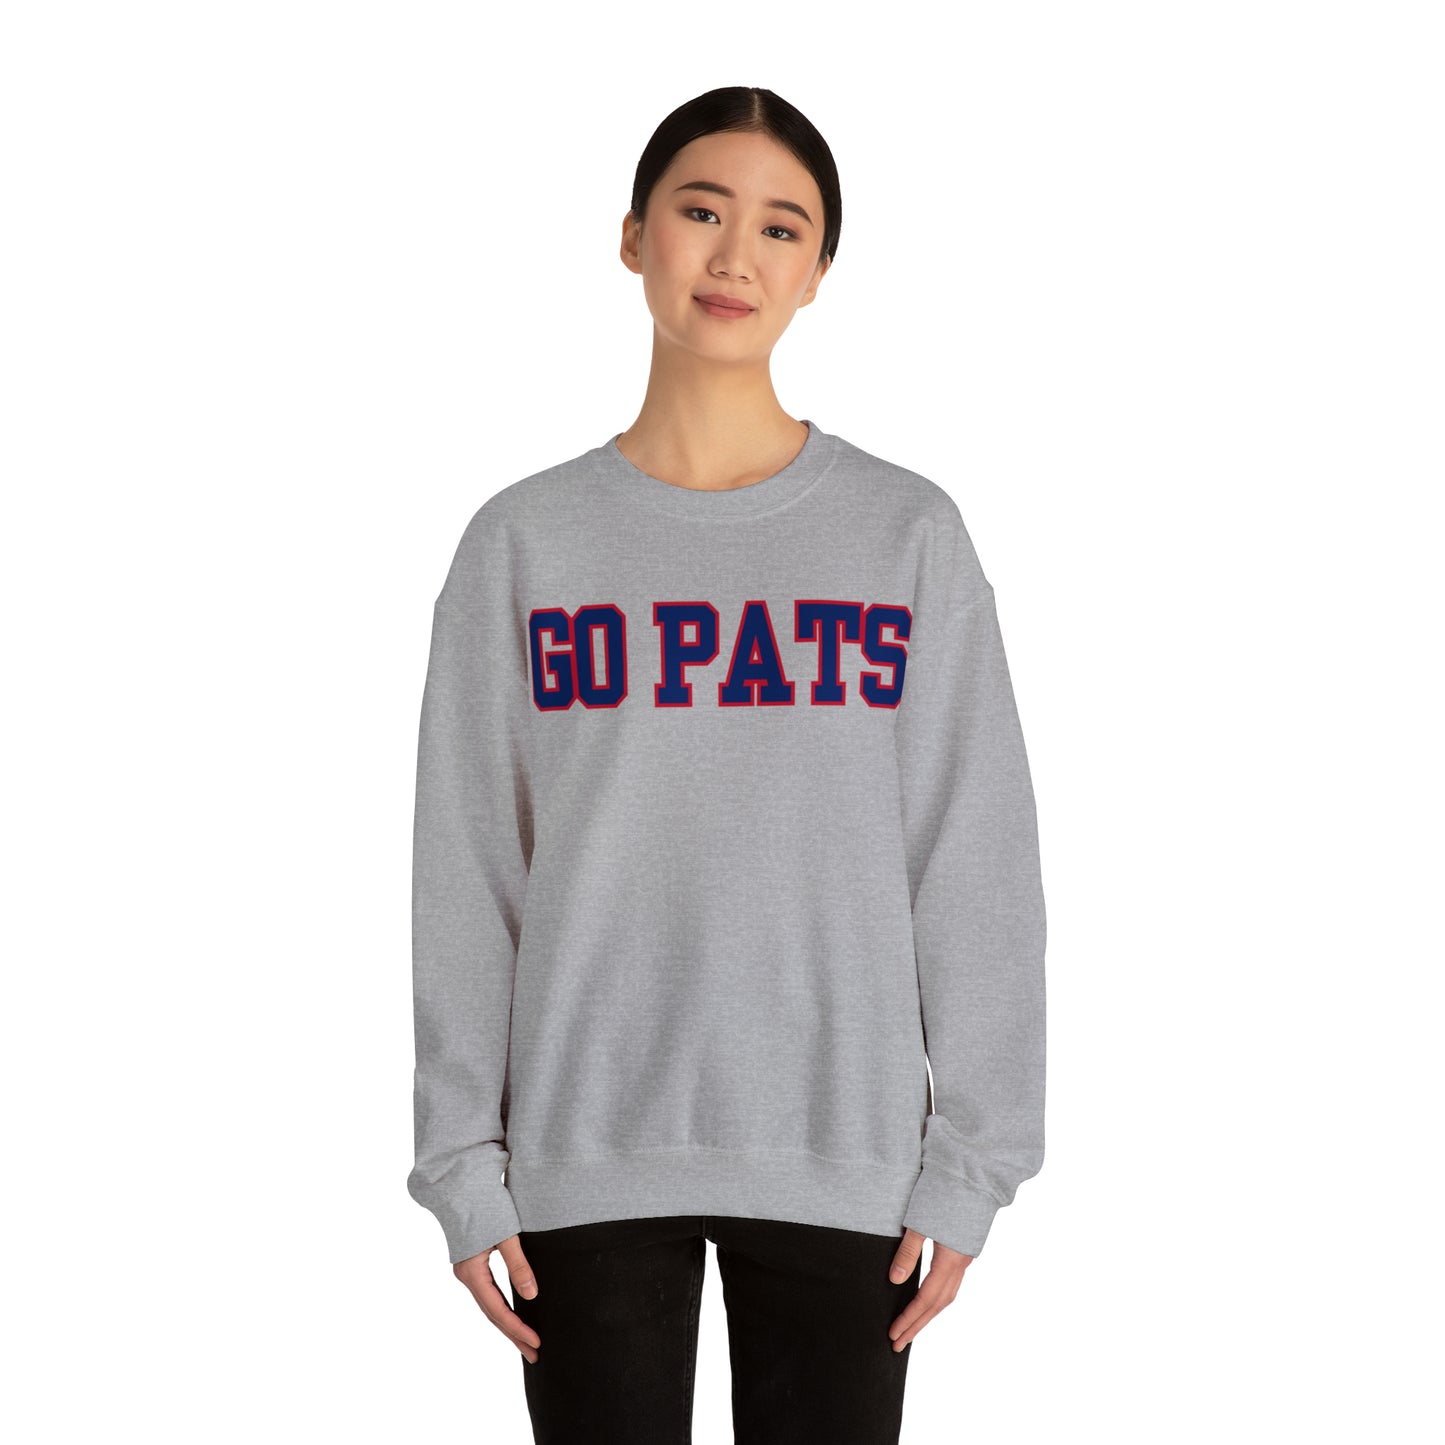 GO PATS Crewneck Sweatshirt